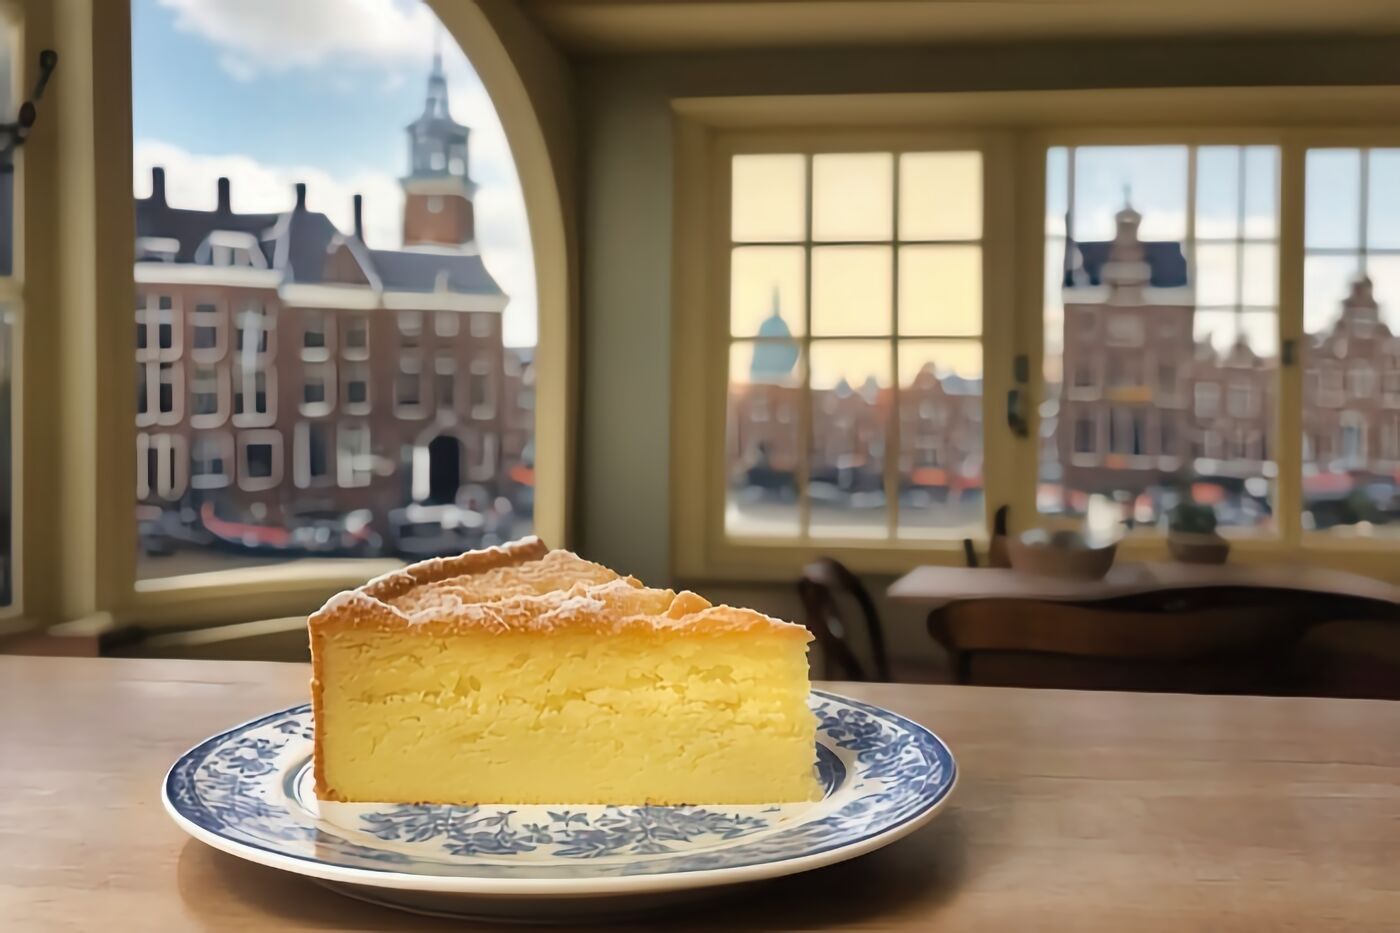 Boterkoek (Dutch Butter Cake) Recipe